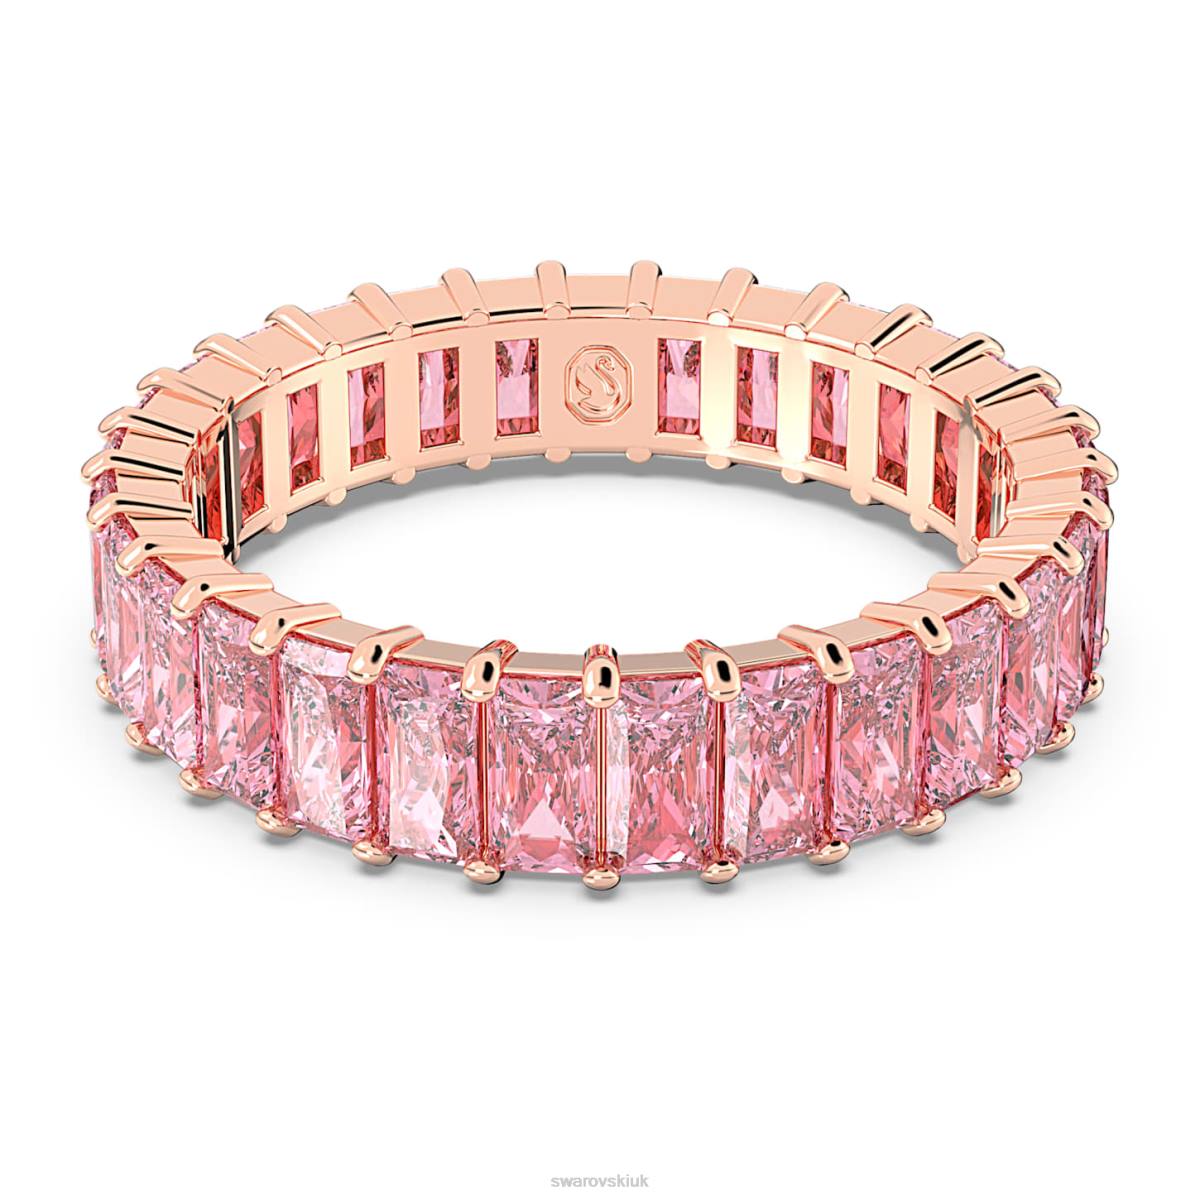 Jewelry Swarovski Matrix ring Baguette cut, Pink, Rose gold-tone plated 48JX1000